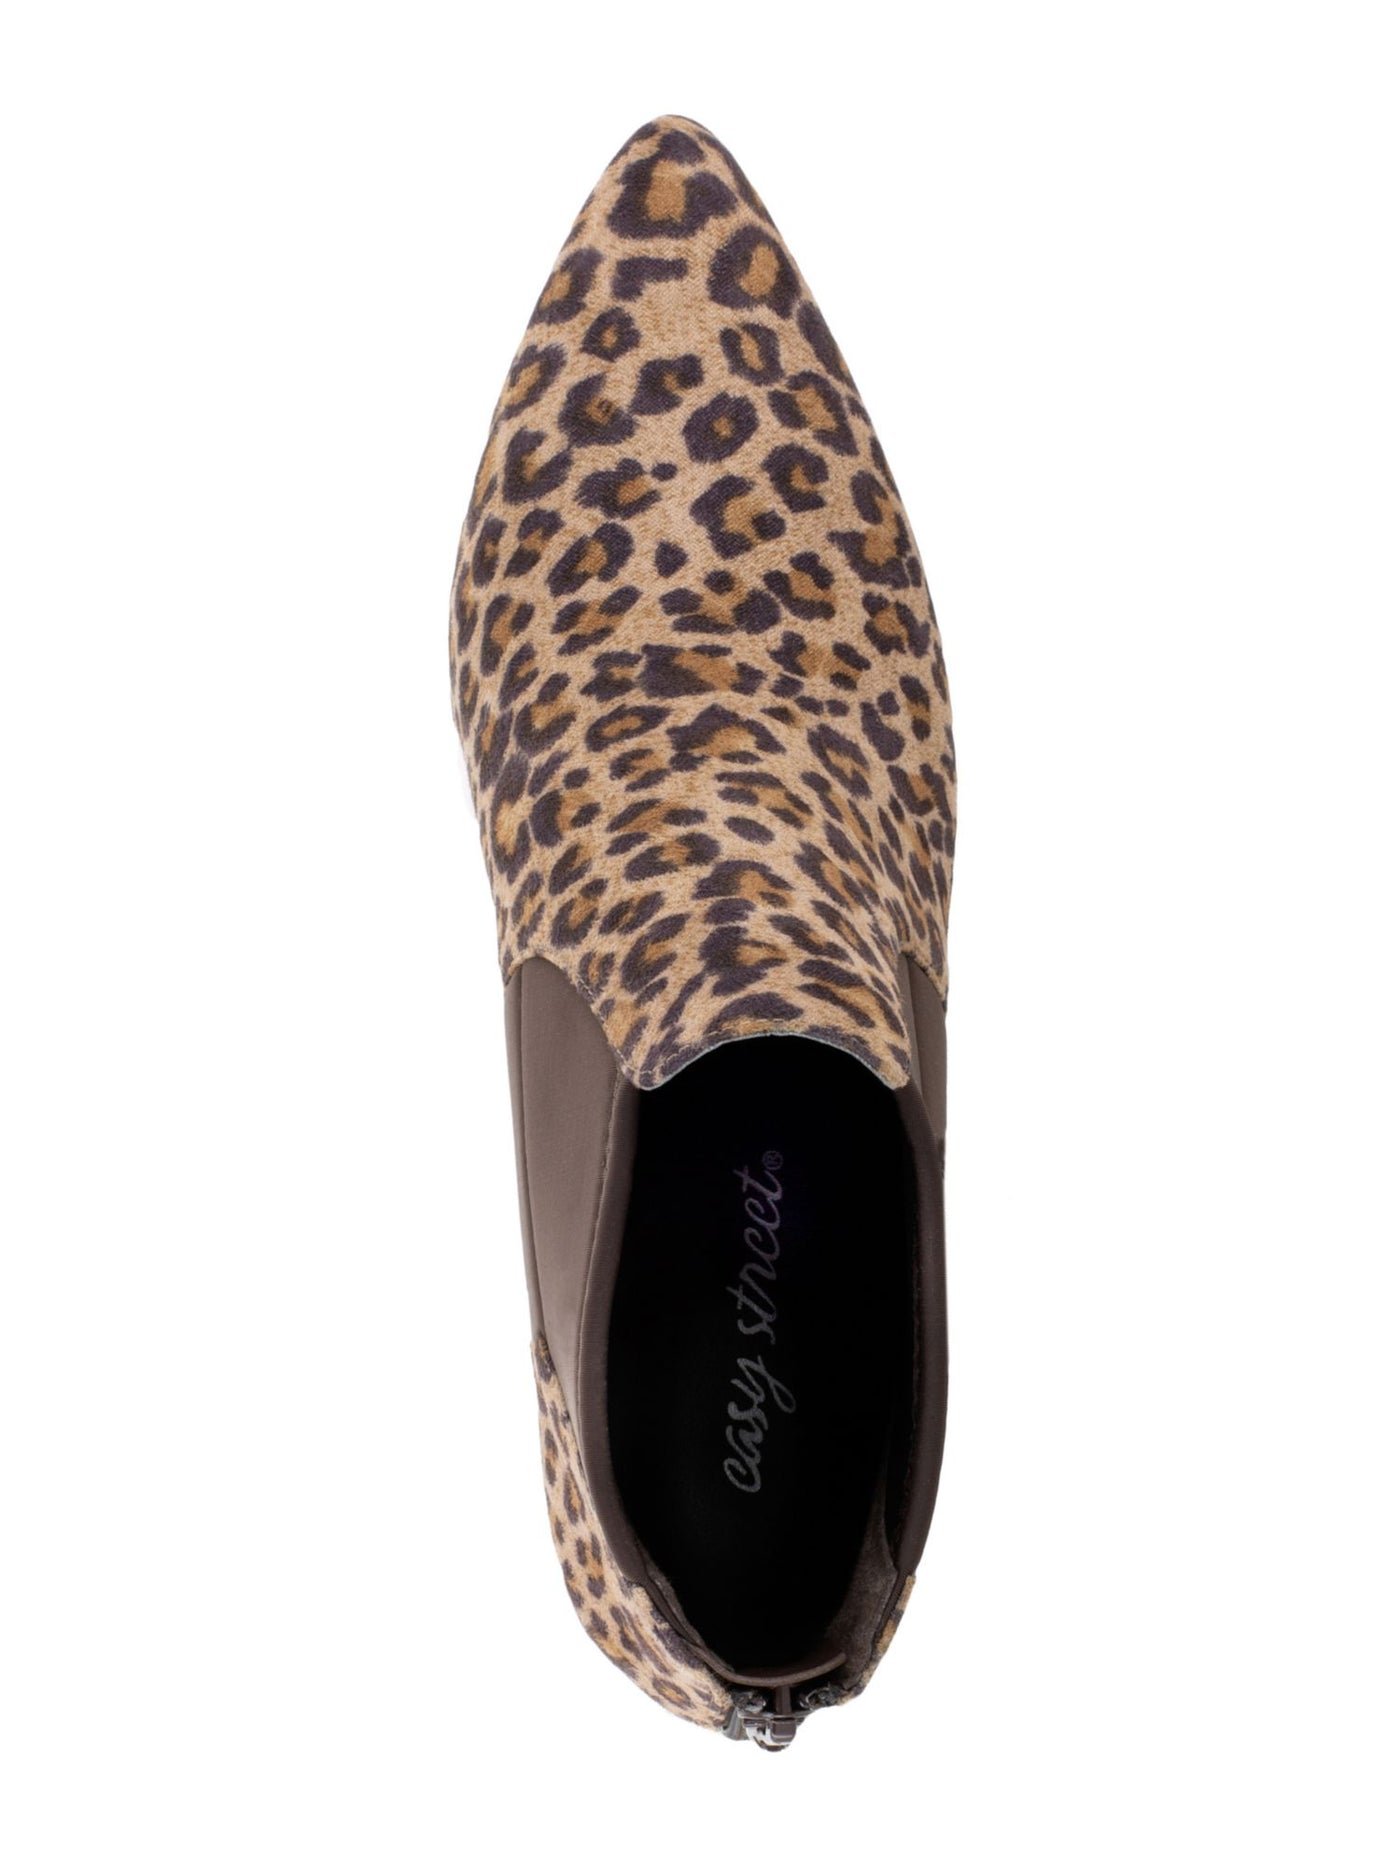 EASY SPIRIT Womens Beige Animal Print Leopard Padded Stretch Saint Pointed Toe Kitten Heel Zip-Up Booties 9 M